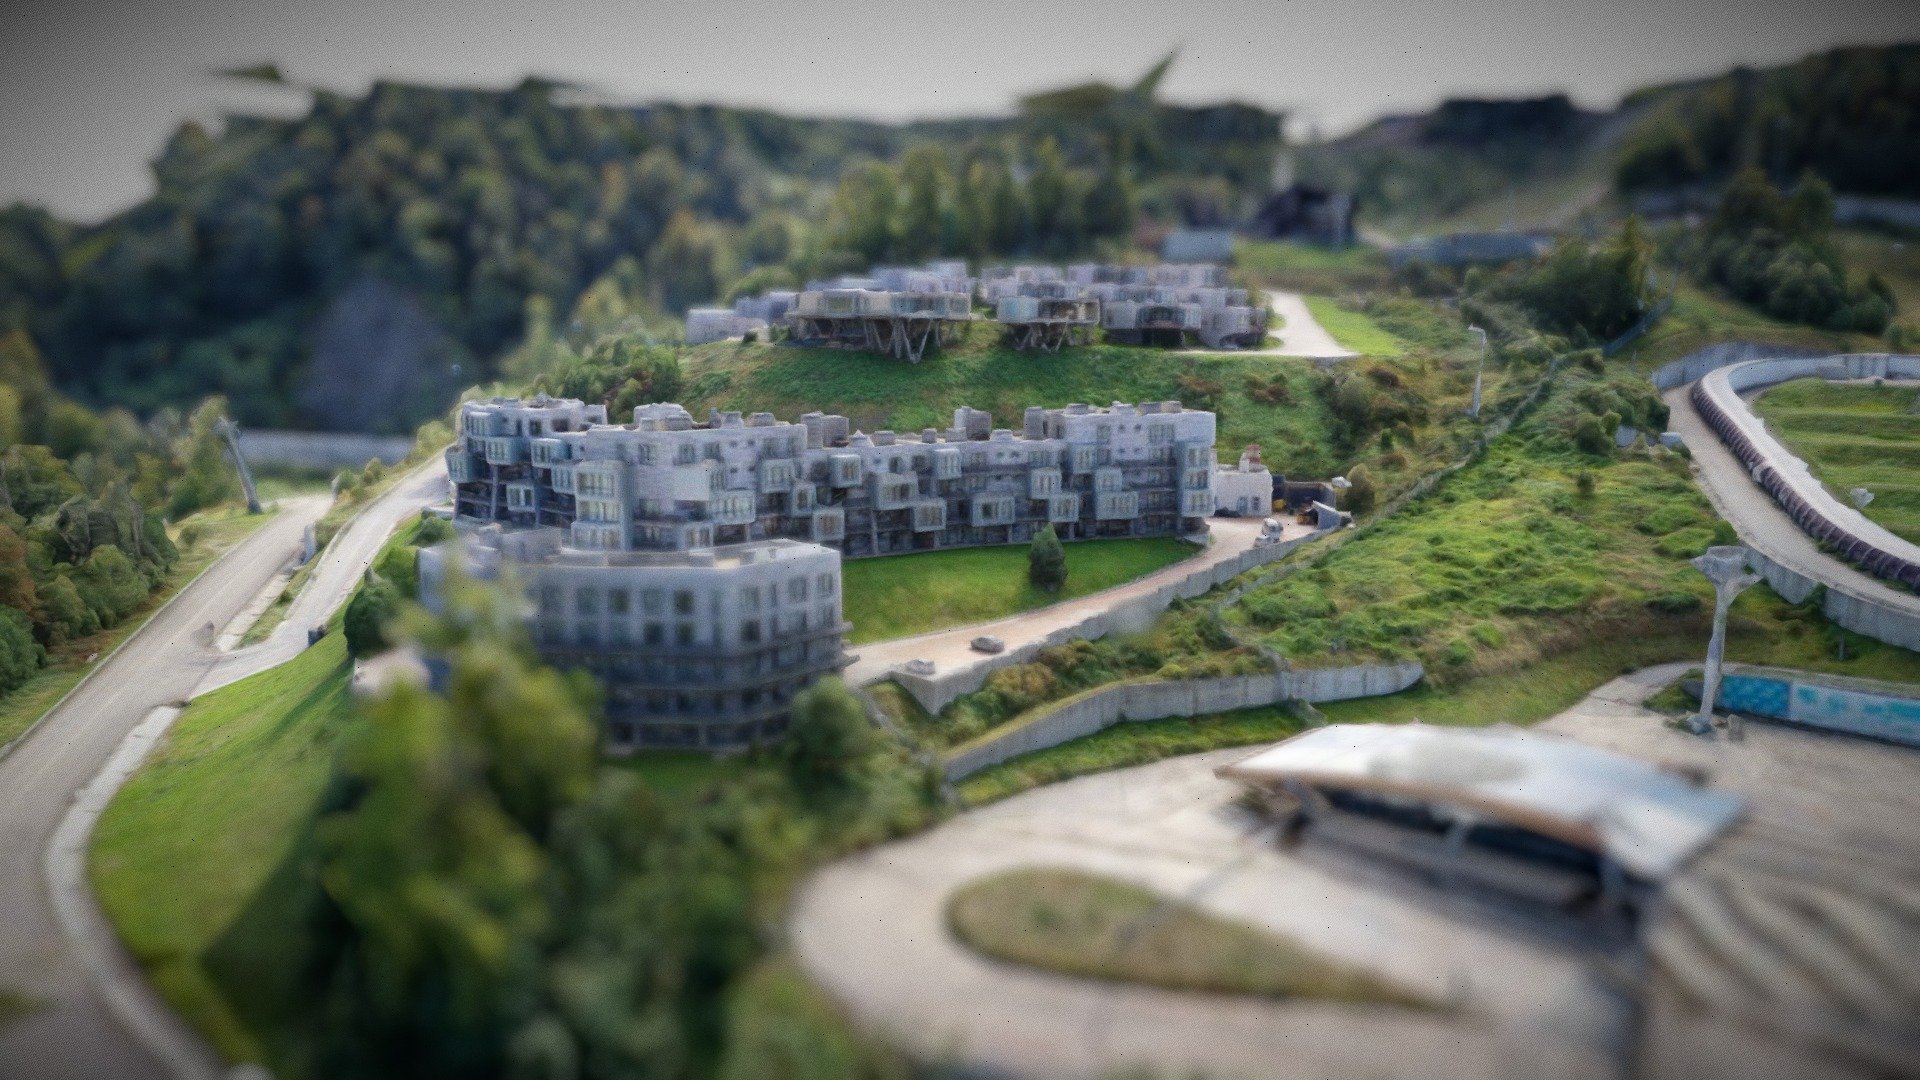 sky park hotel on the mountain yf dscjnt 1500 meters - Hotel - SKYPARK - 3D model by Ilya Yakimenko (@ssintezz) 3d model